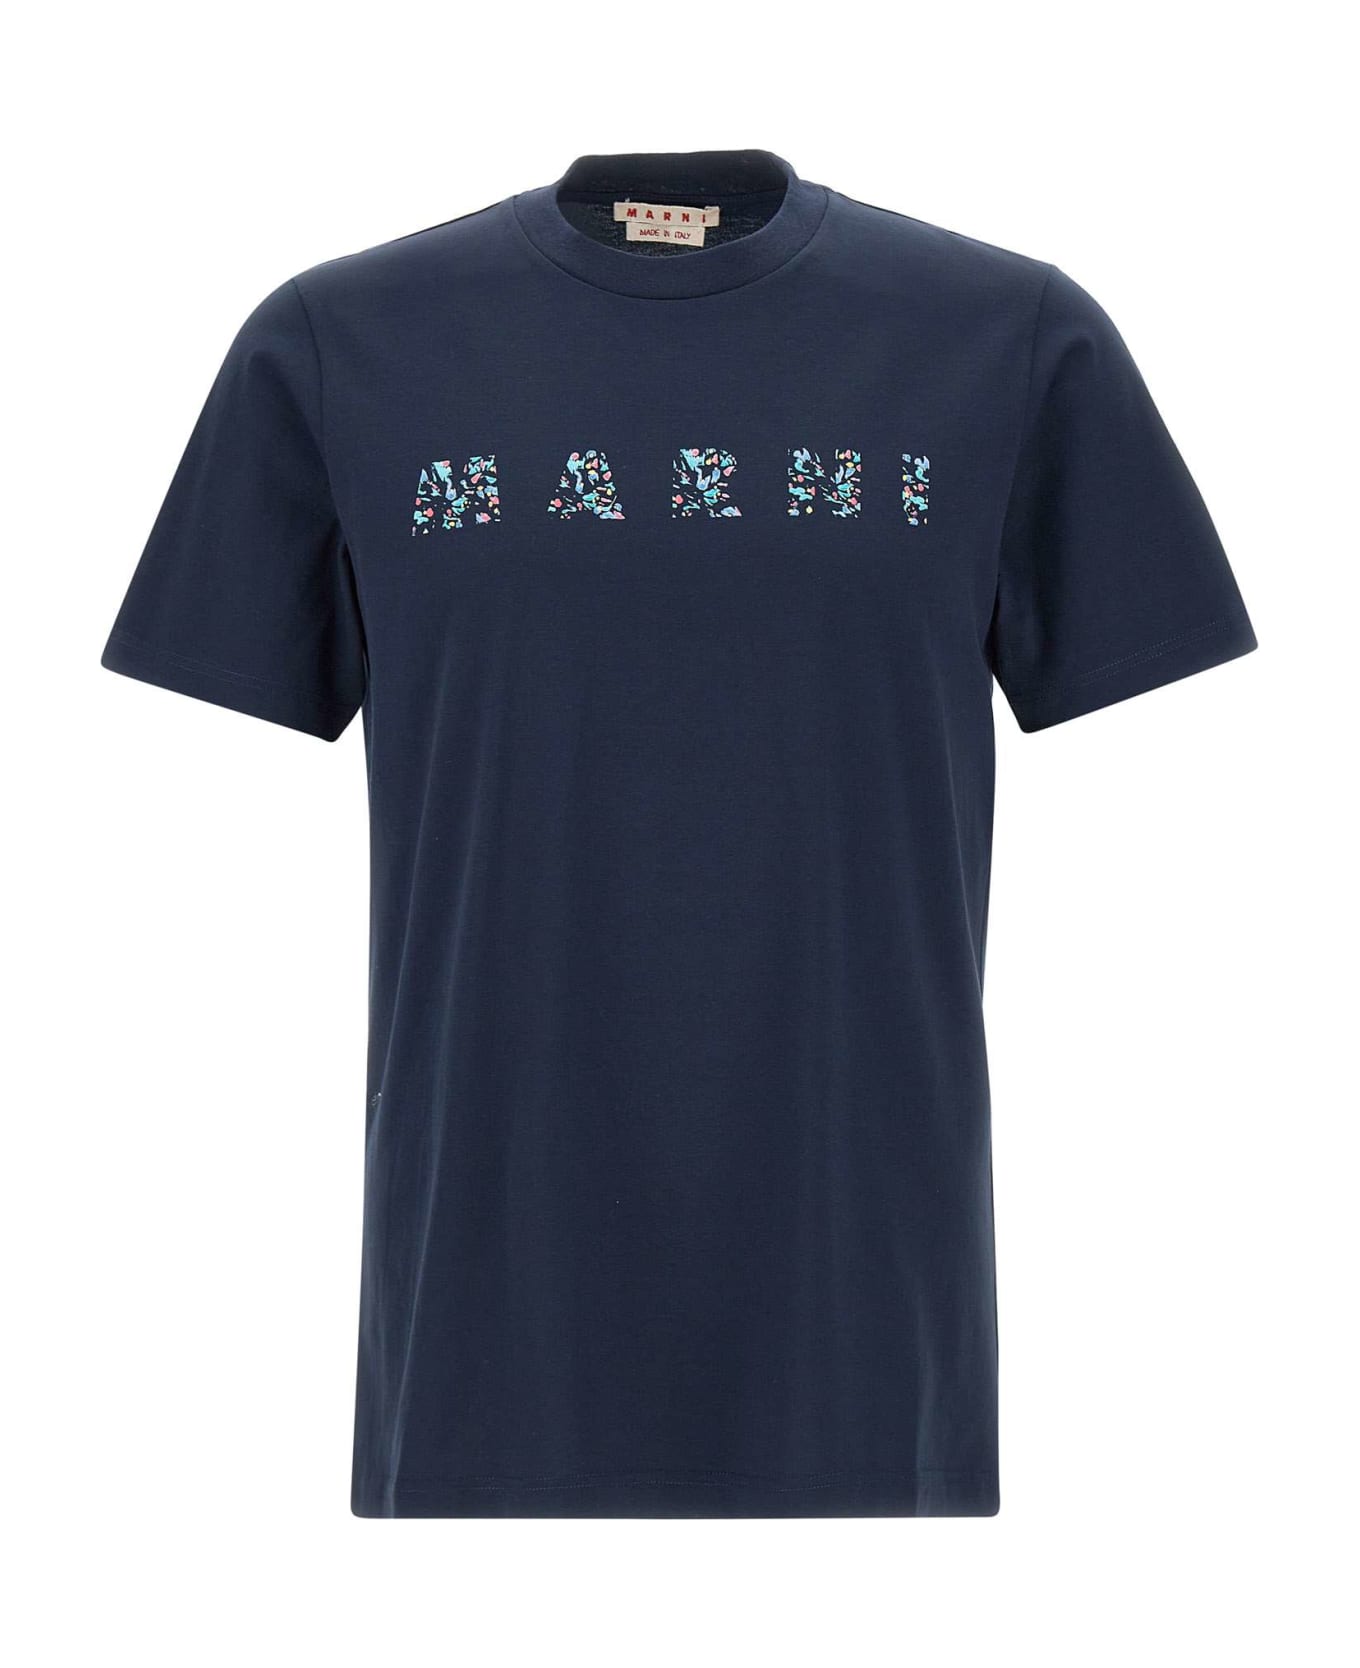 Marni "floral Logo" Cotton T-shirt - BLUE